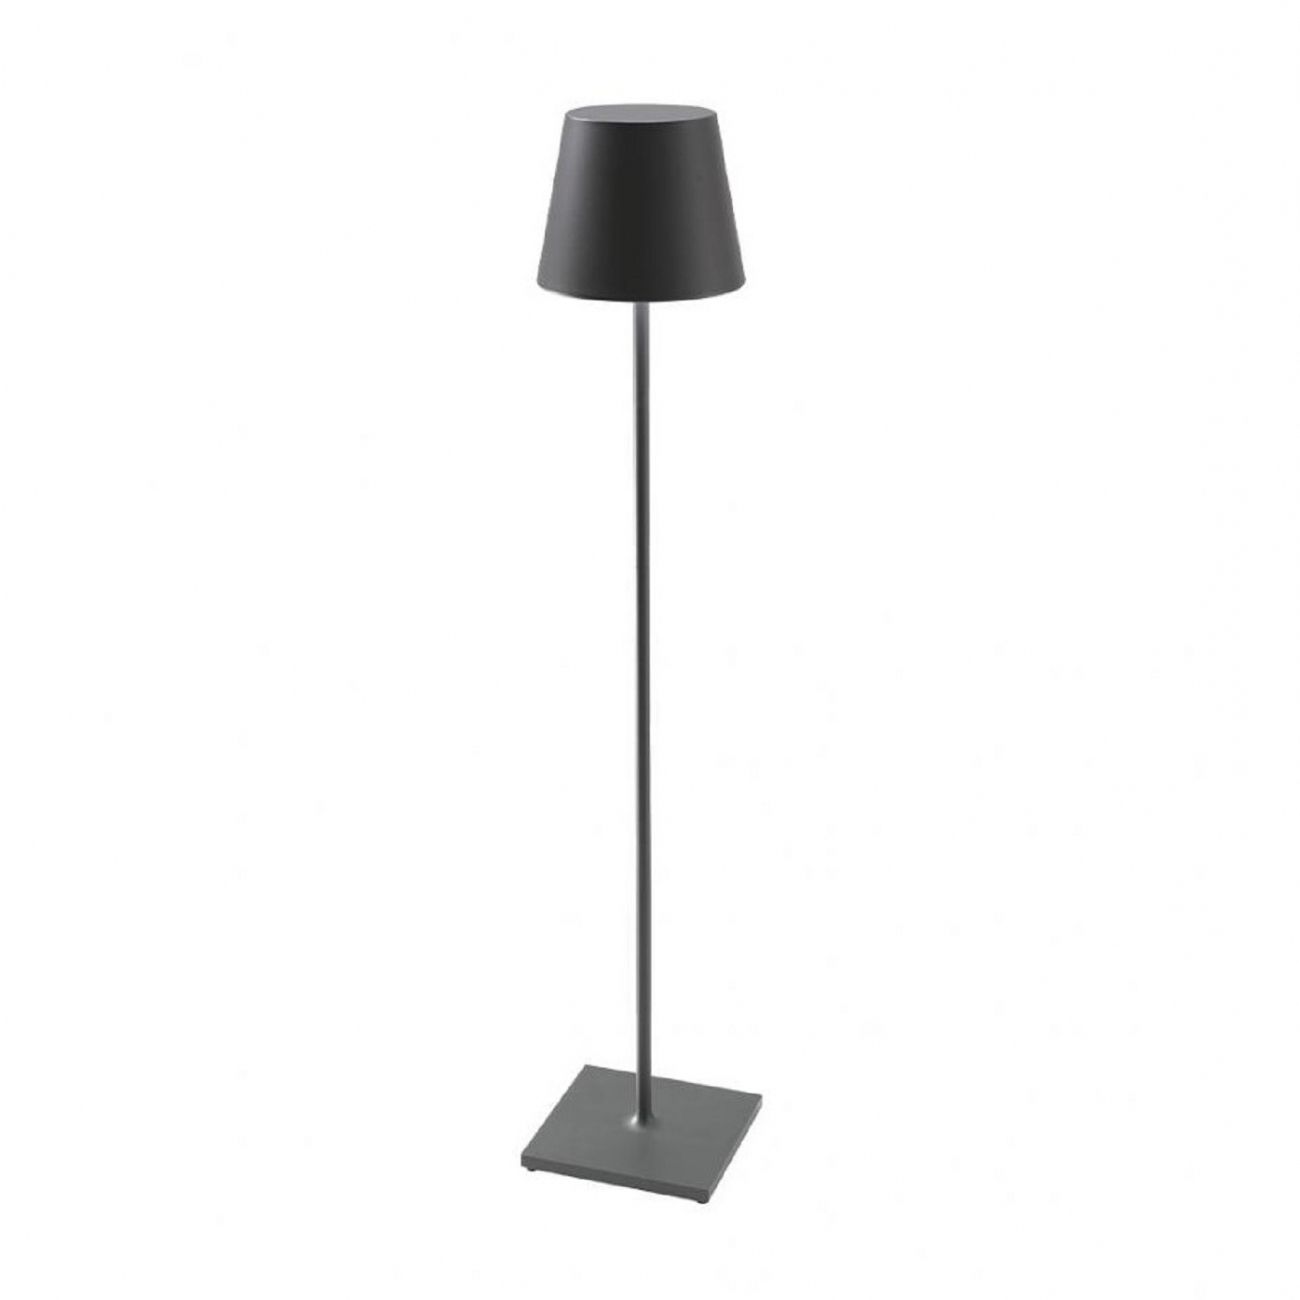 Zafferano Poldina Xxl Pro Floor Lamp Dark Grey With Charcoal Grey Floor Lamps (View 18 of 20)